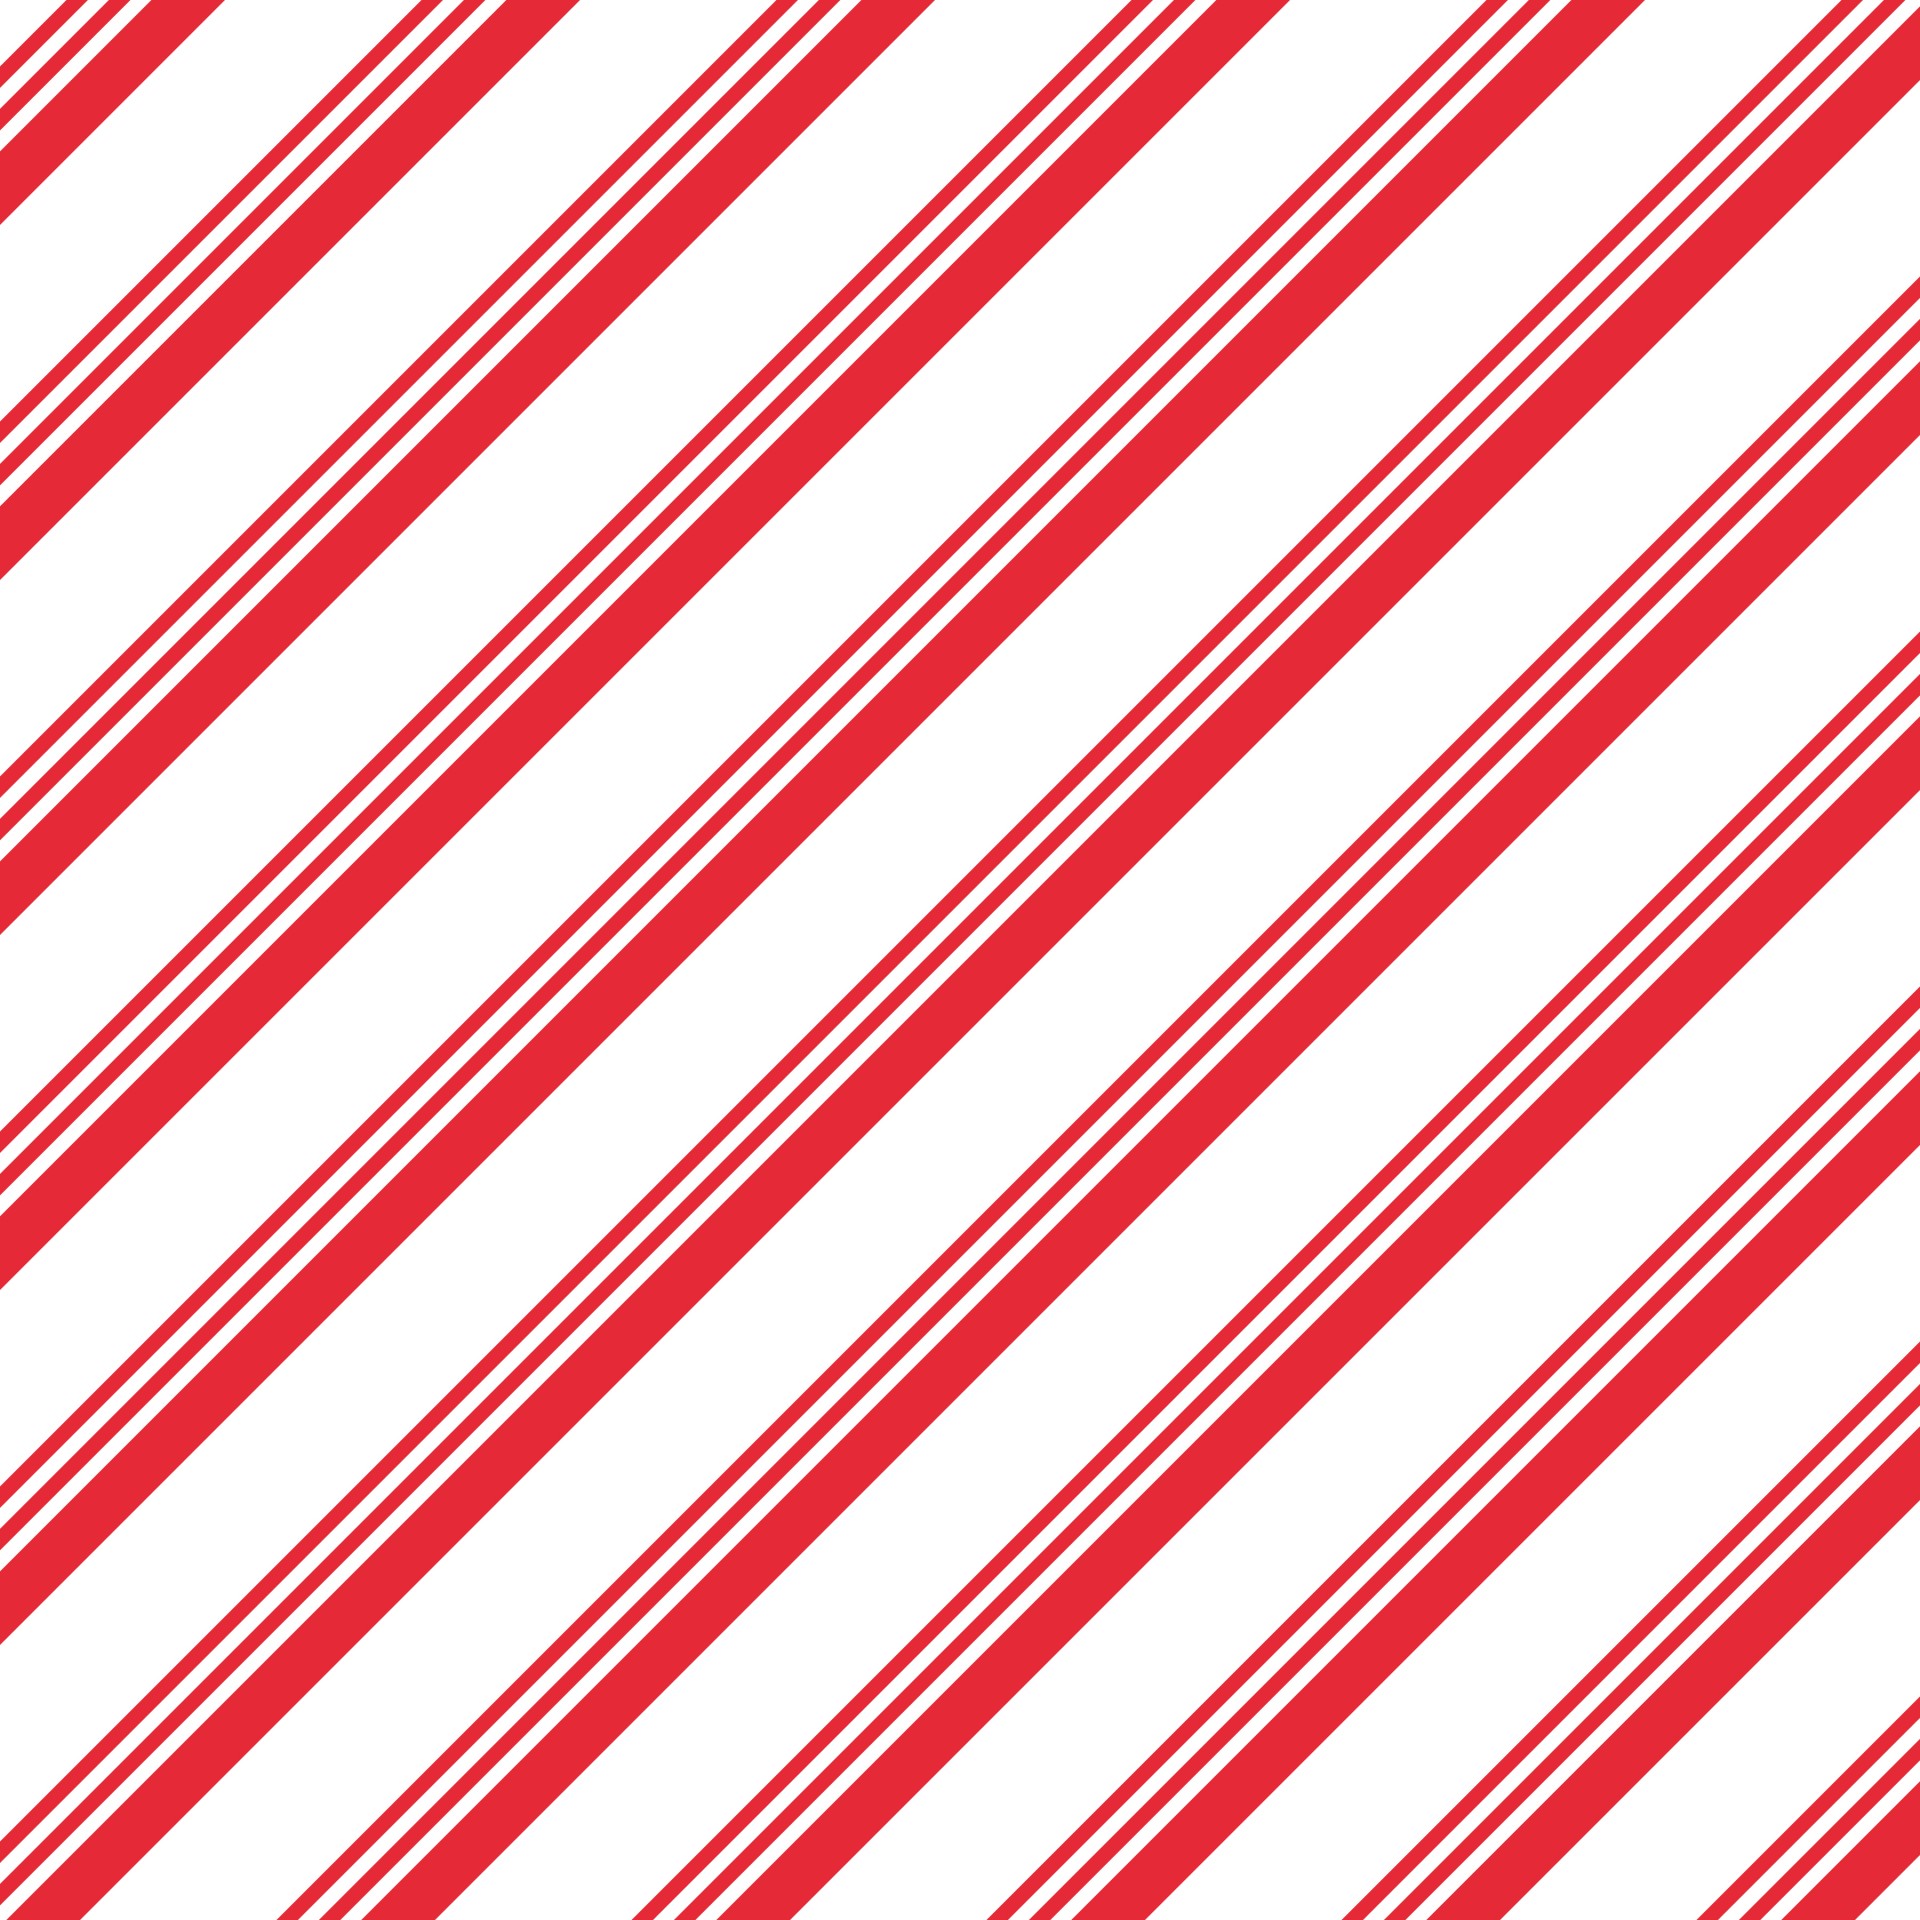 alizarin crimson red stripes pattern free photo